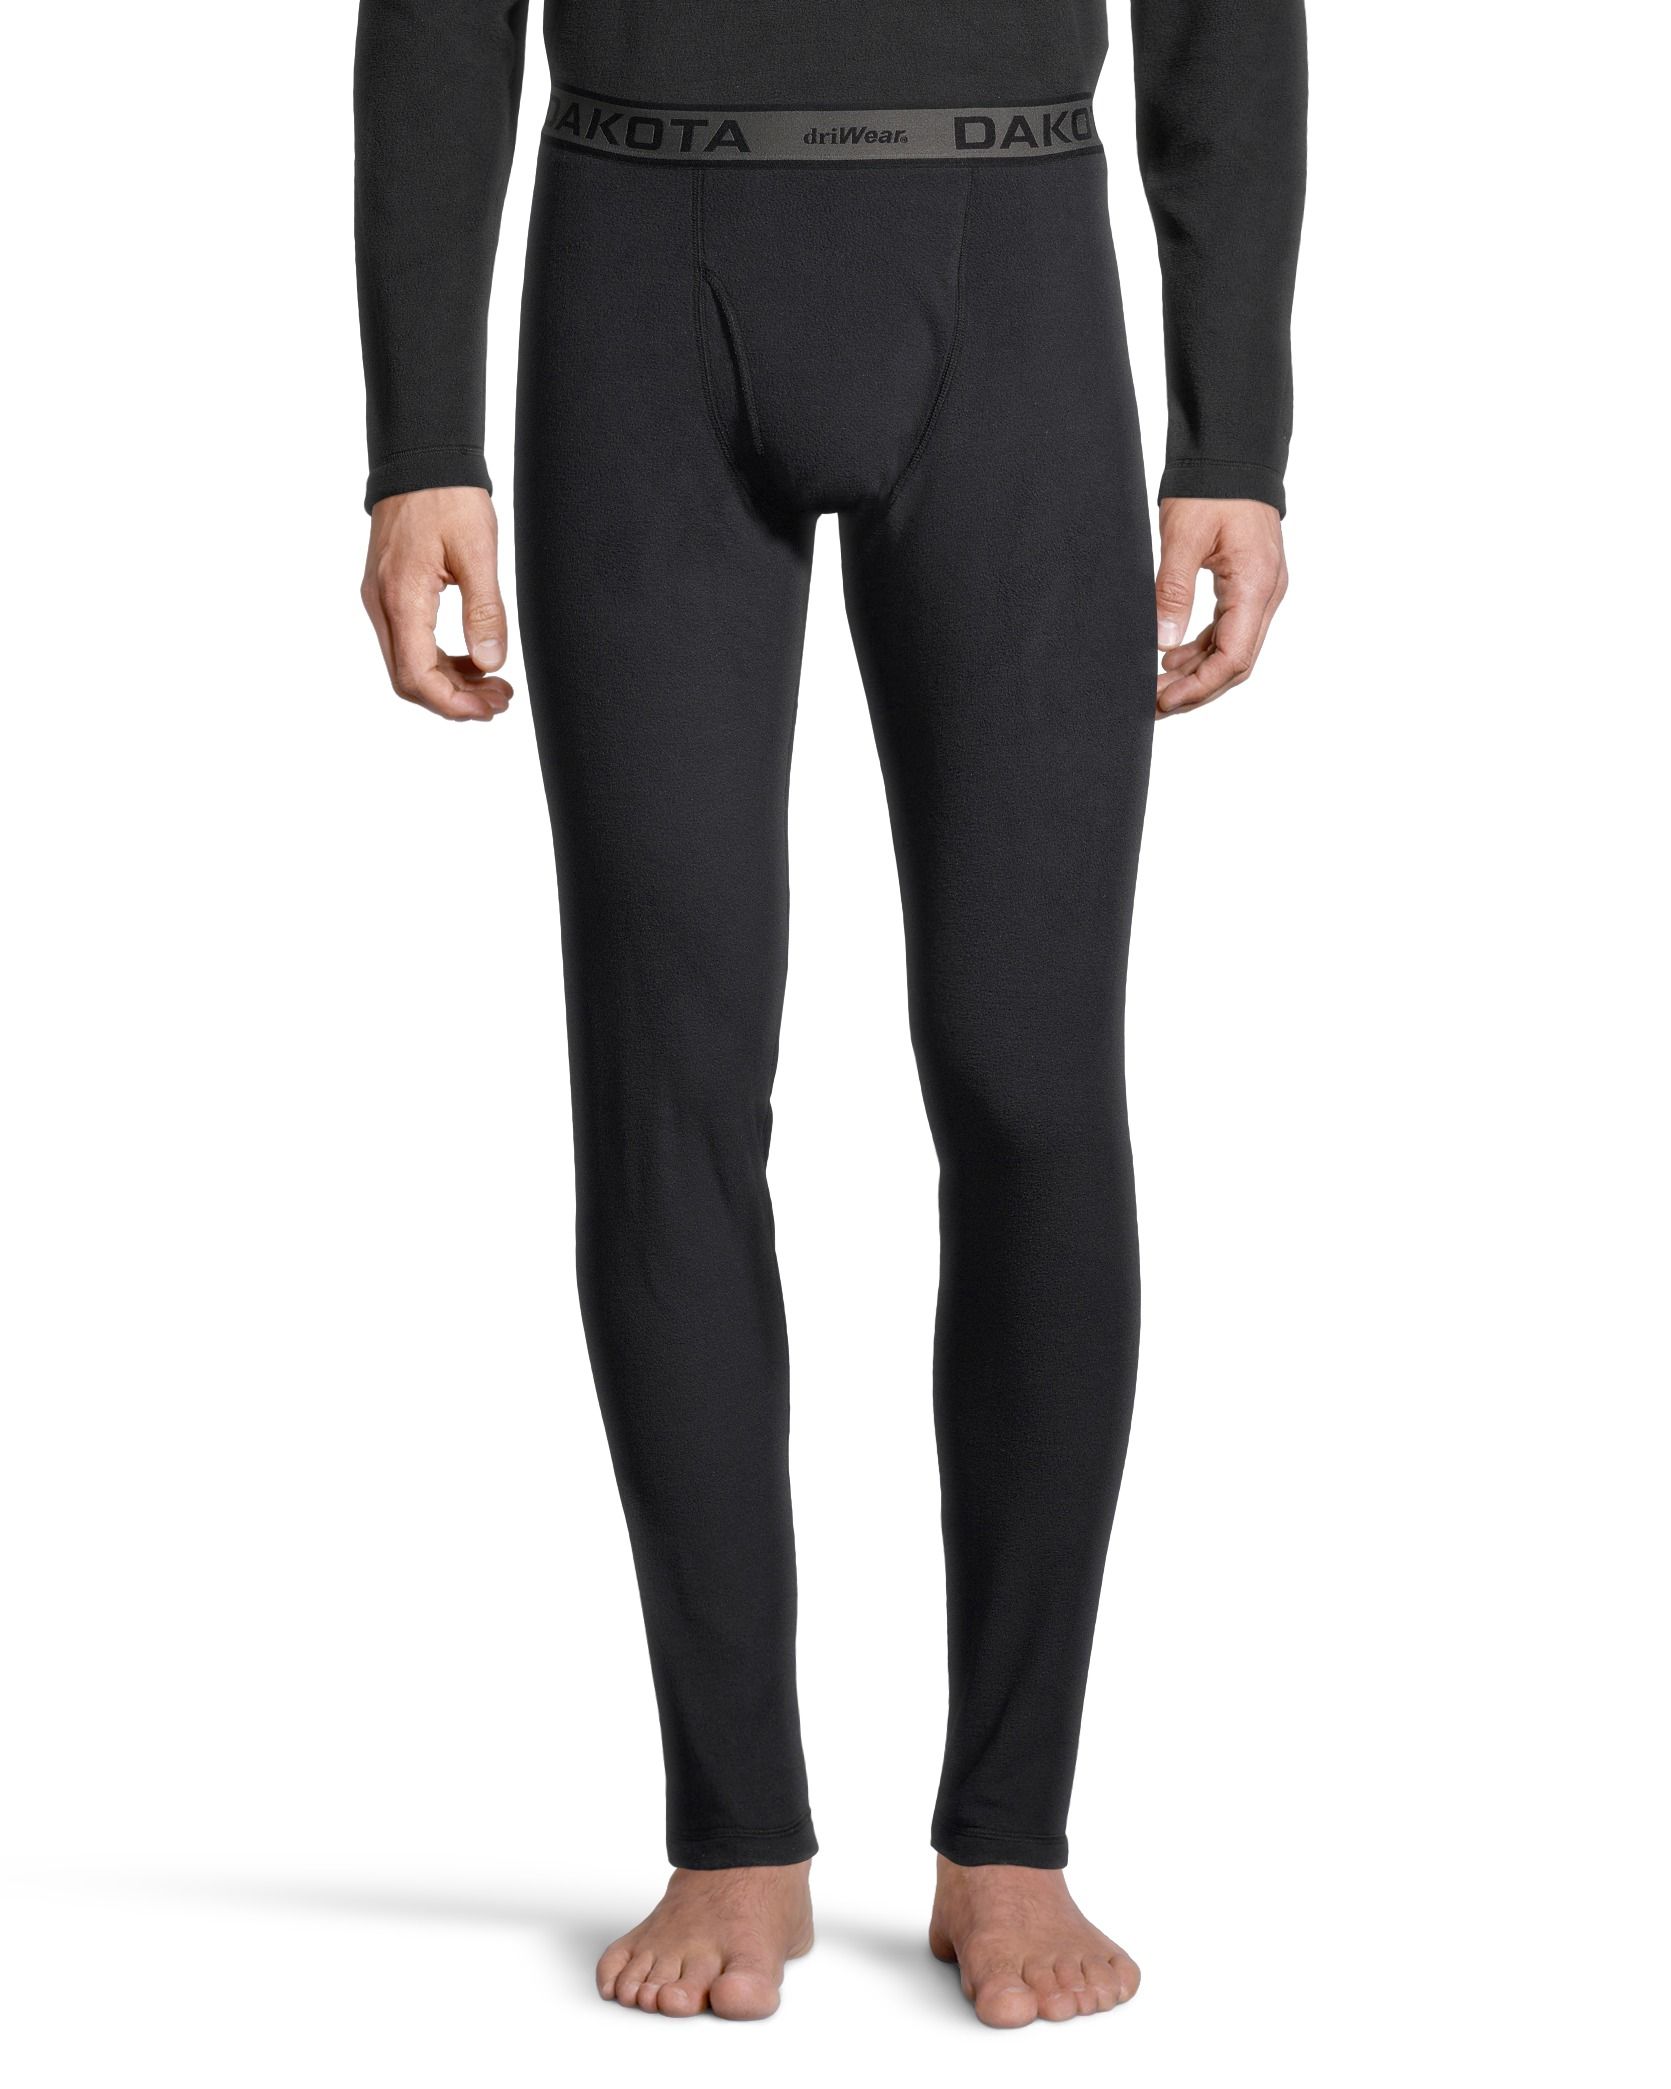 Dakota WorkPro Series Men's Driwear Thermal Fleece Pants - Black